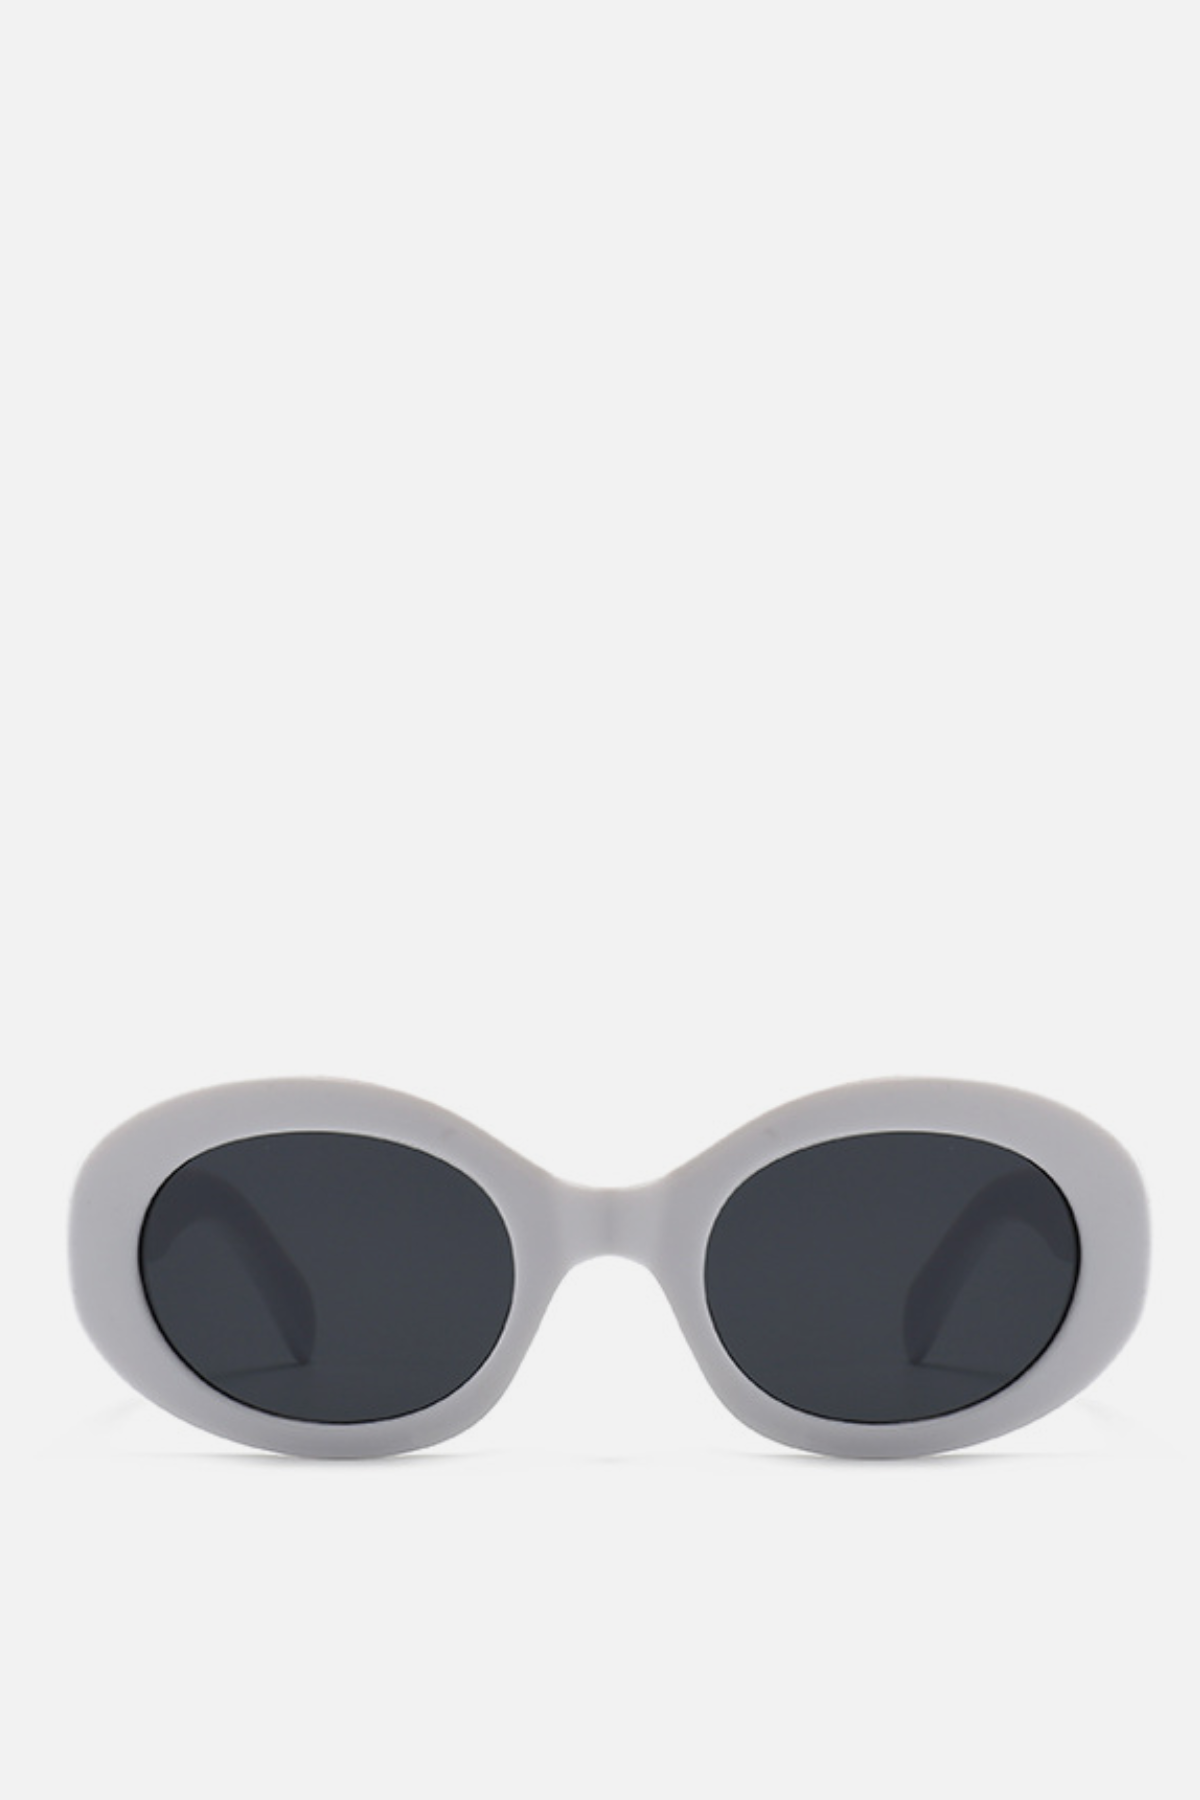 LIMA White Round Sunglasses